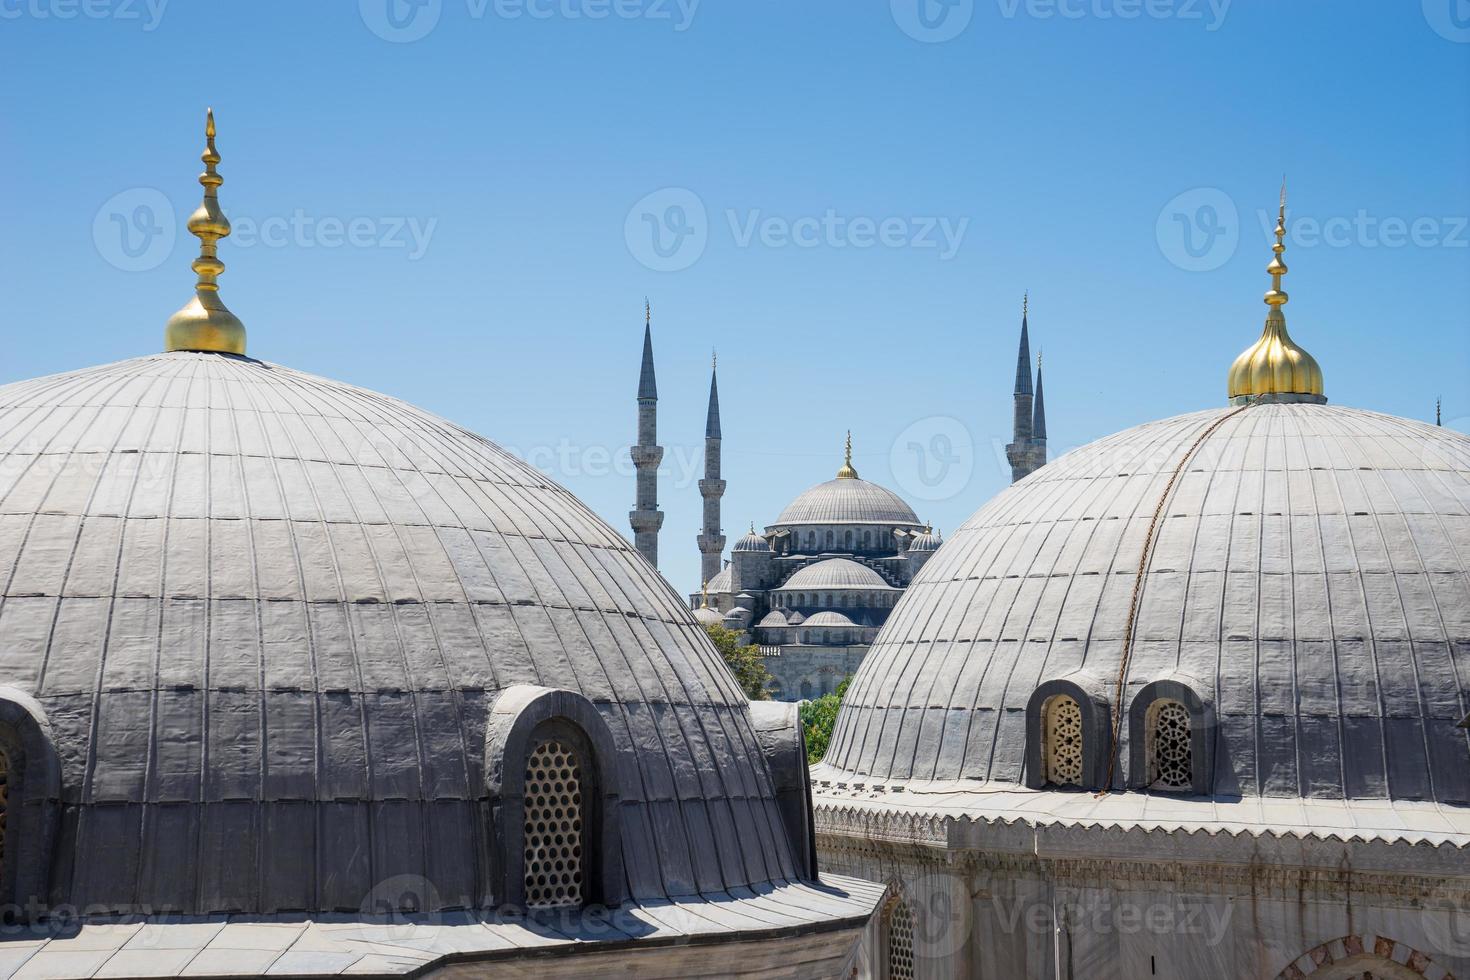 sultan ahmed blauwe moskee, istanbul turkije foto